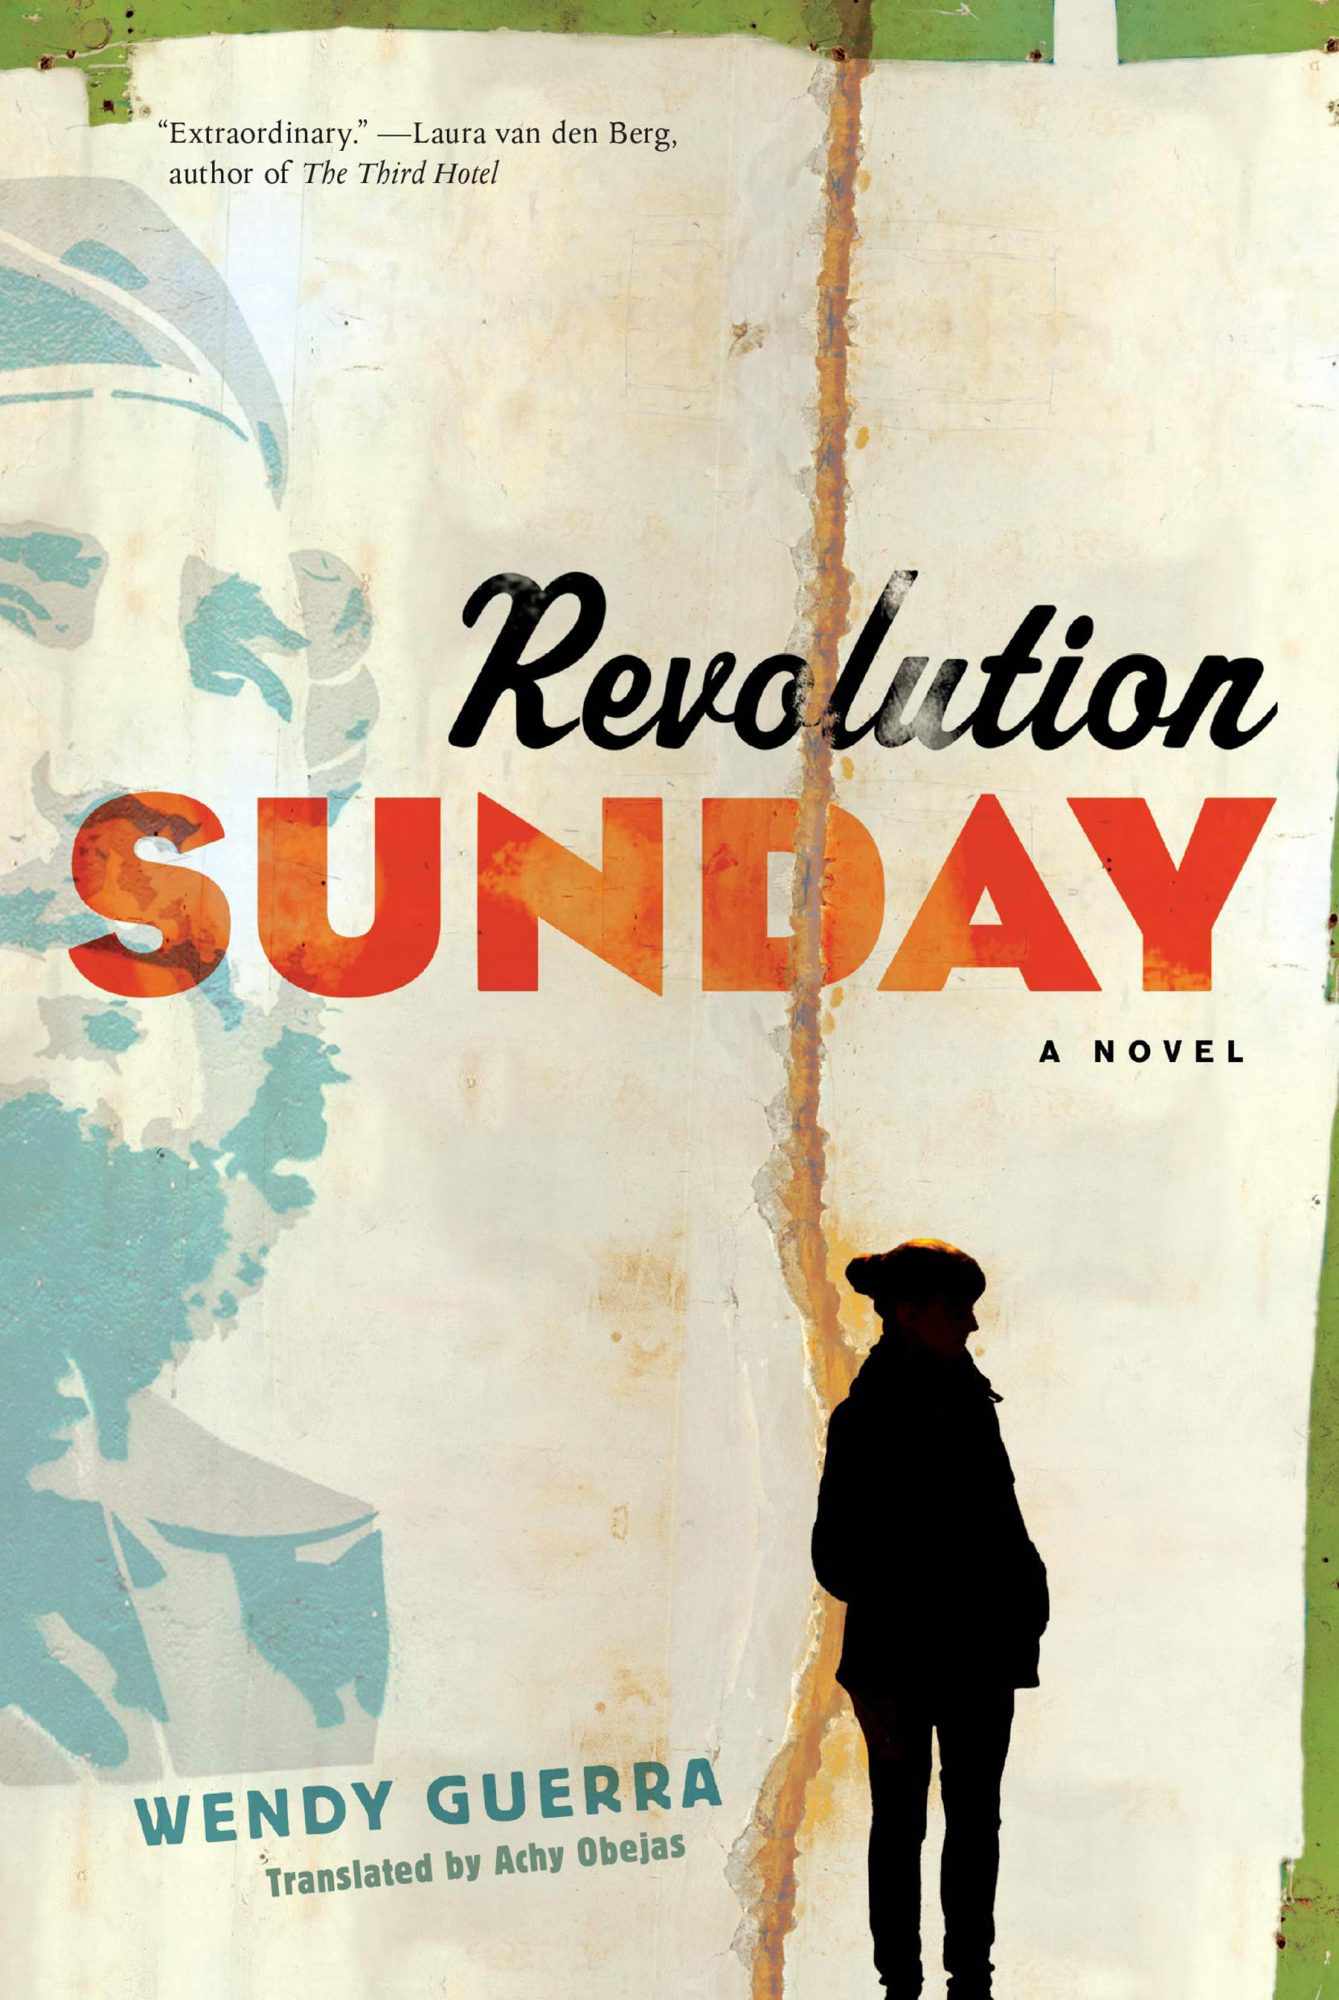 Revolution Sunday, by Wendy Guerra